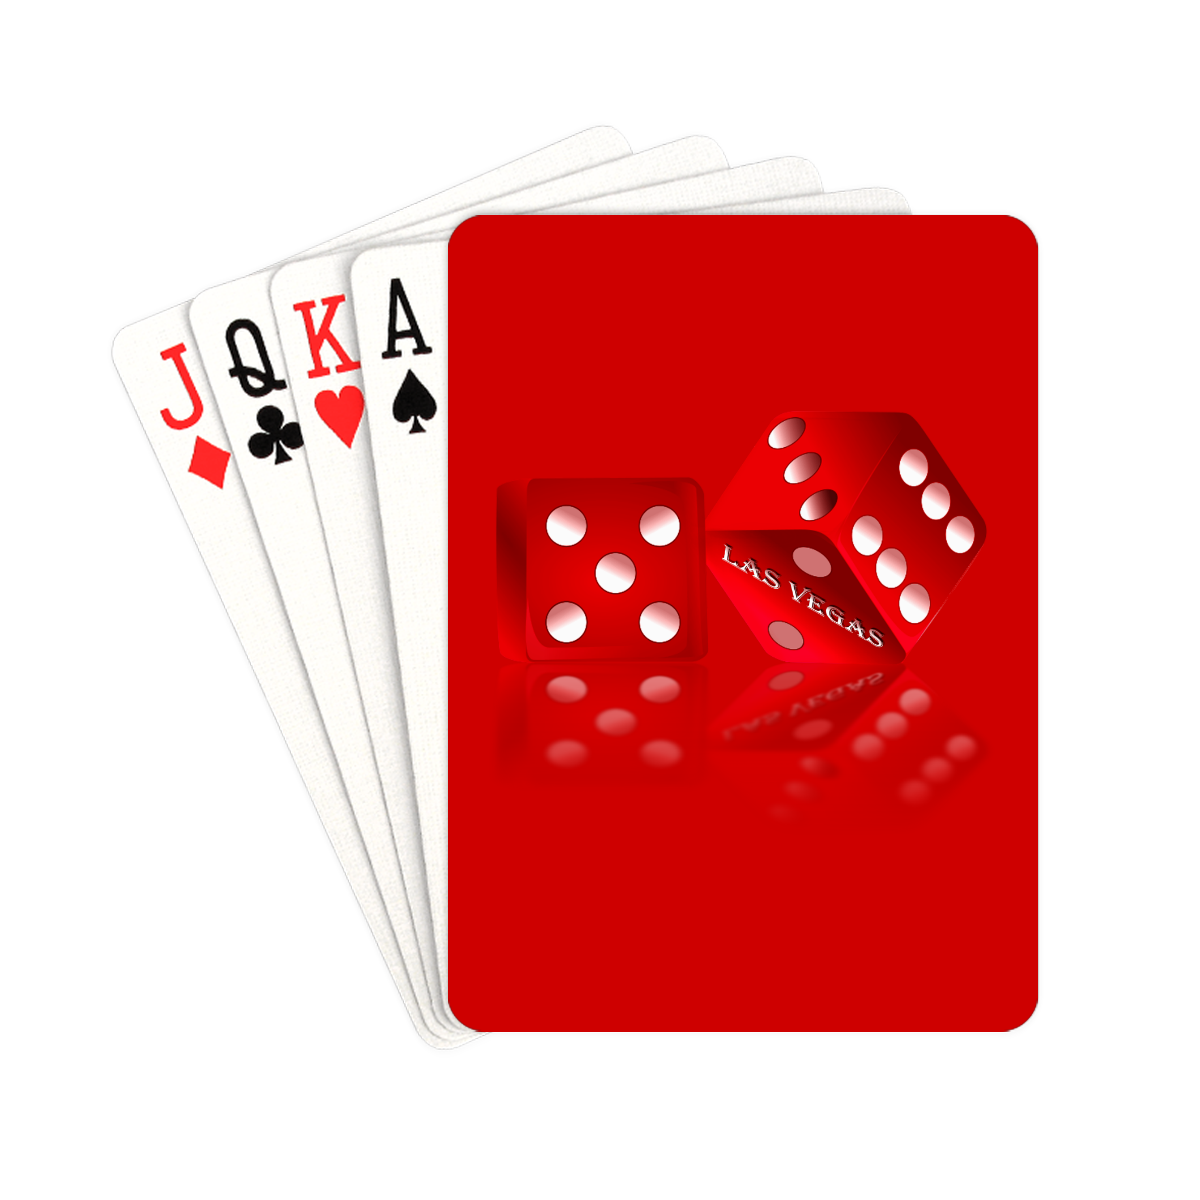 Las Vegas Craps Dice on Red Playing Cards 2.5"x3.5"